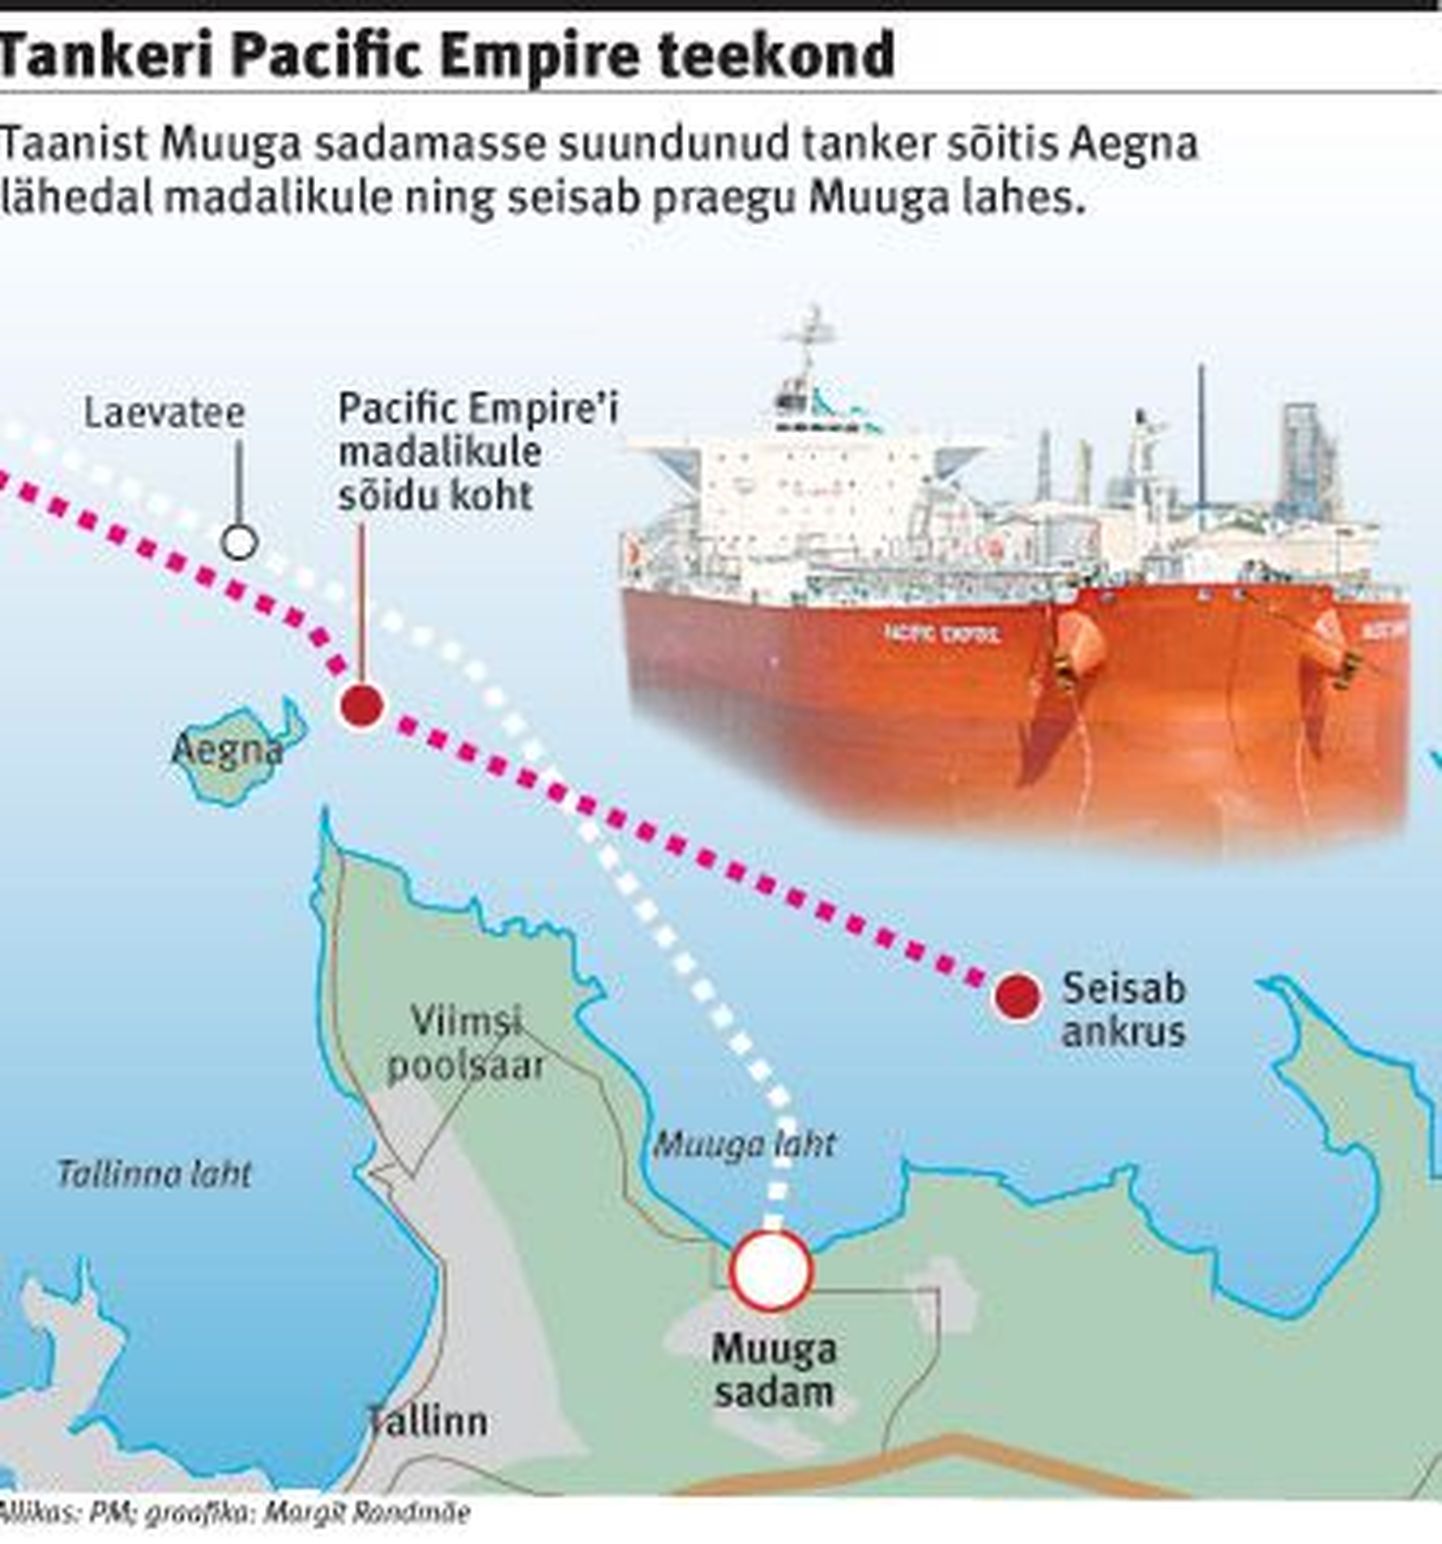 Tankeri Pacific Empire teekond.